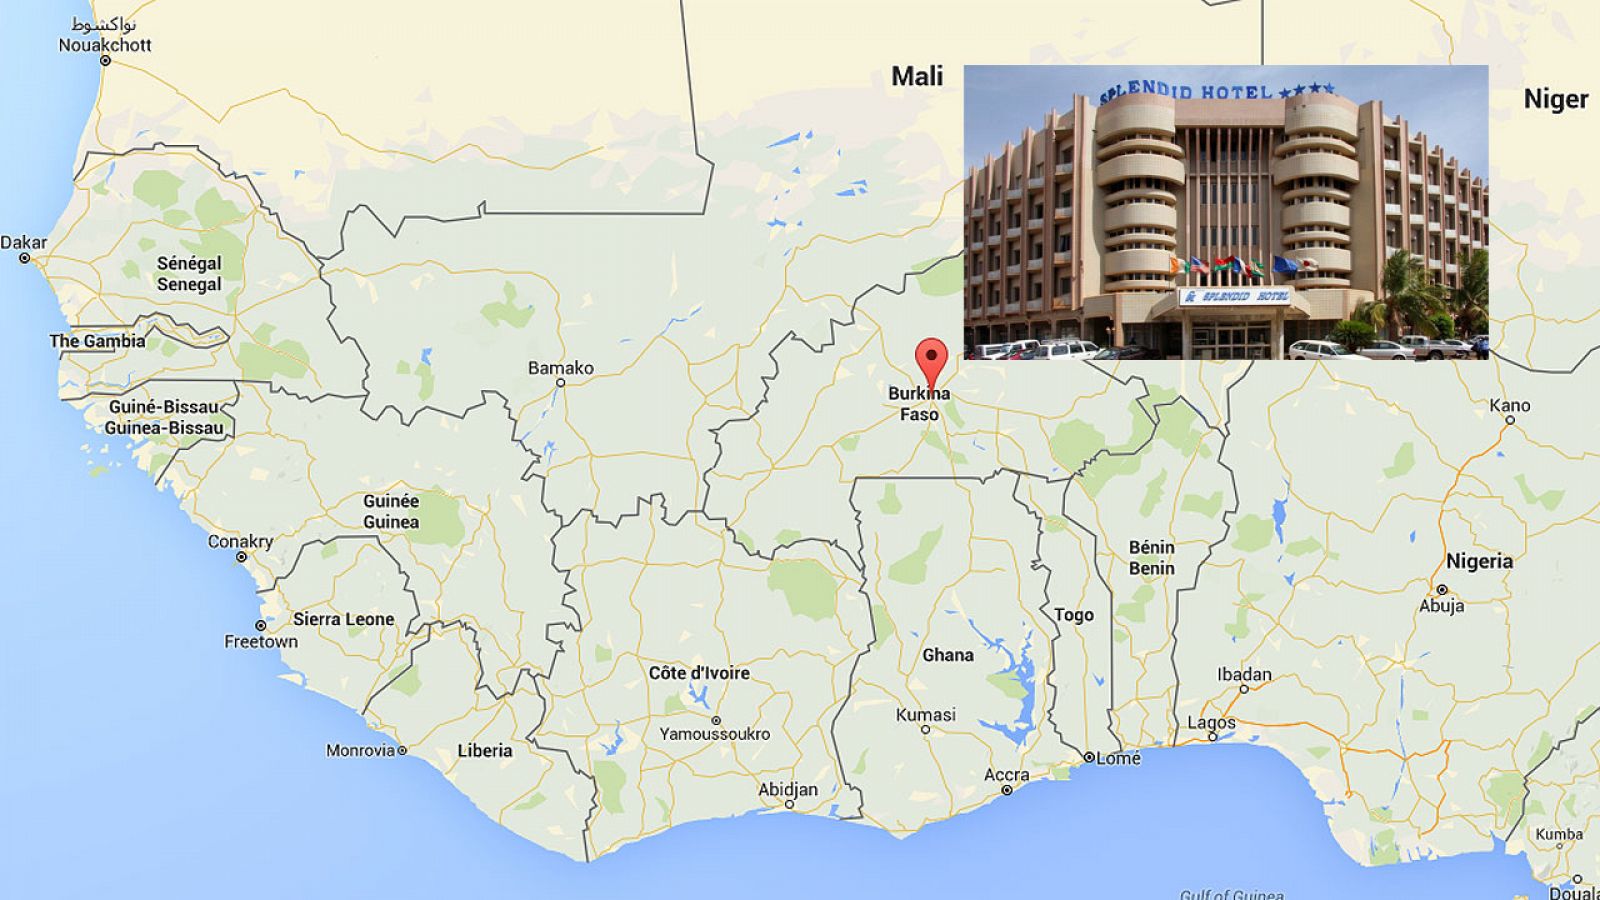 El ataque se ha producido en el Hotal Splendid, en la capital de Burkina Faso